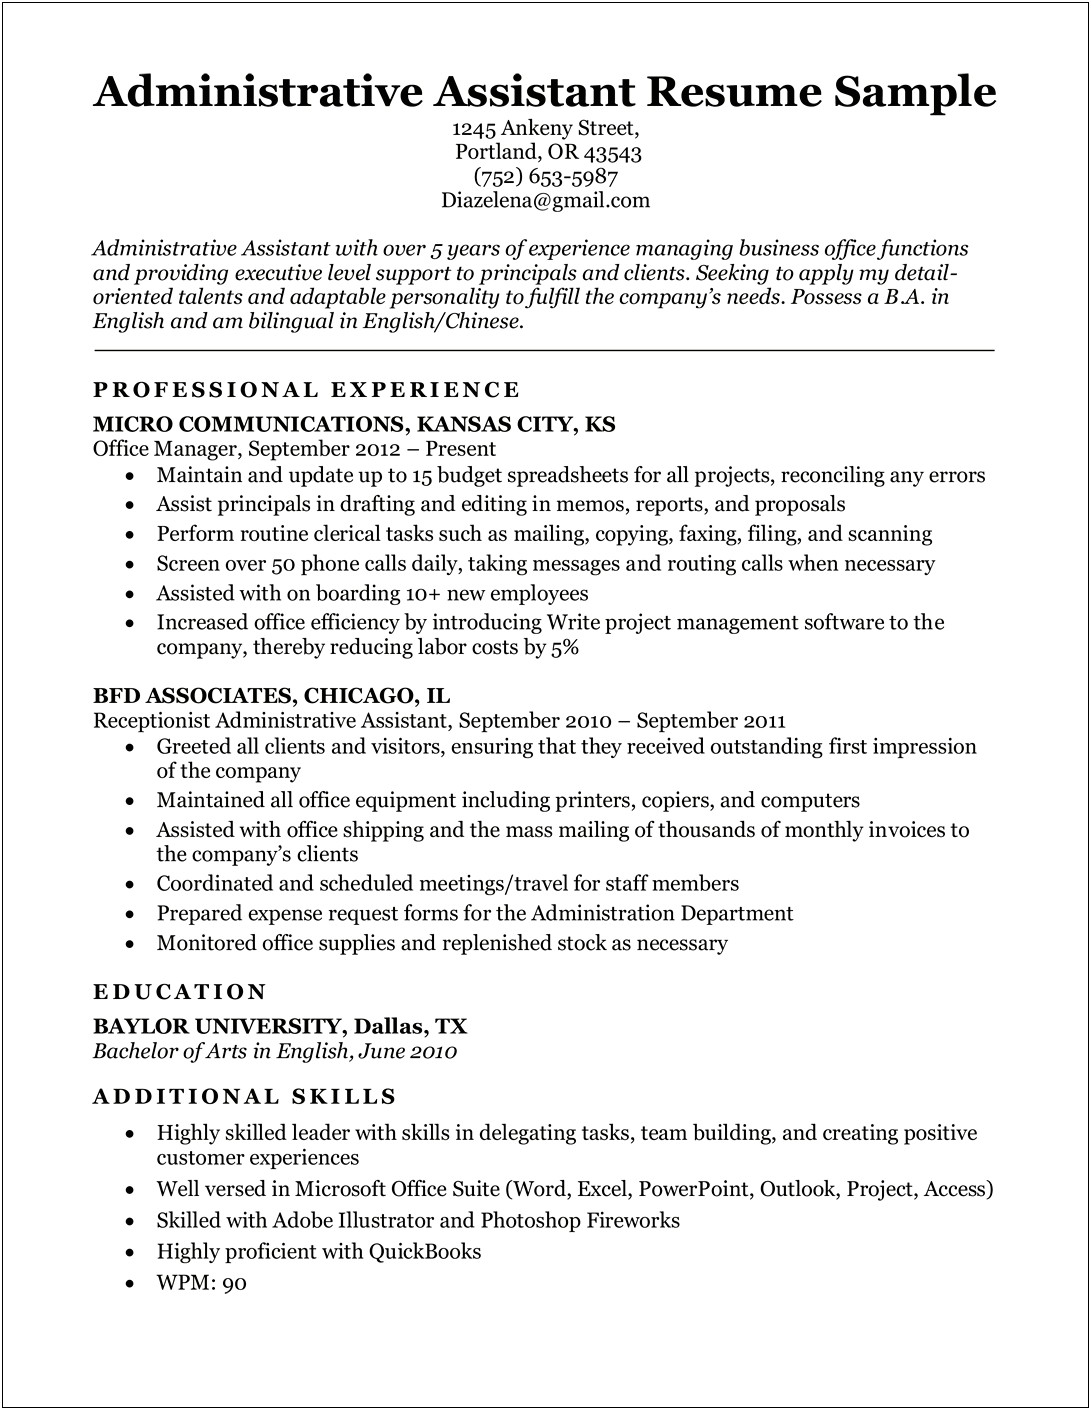 Sample Resume Headline For Administrative Assistant